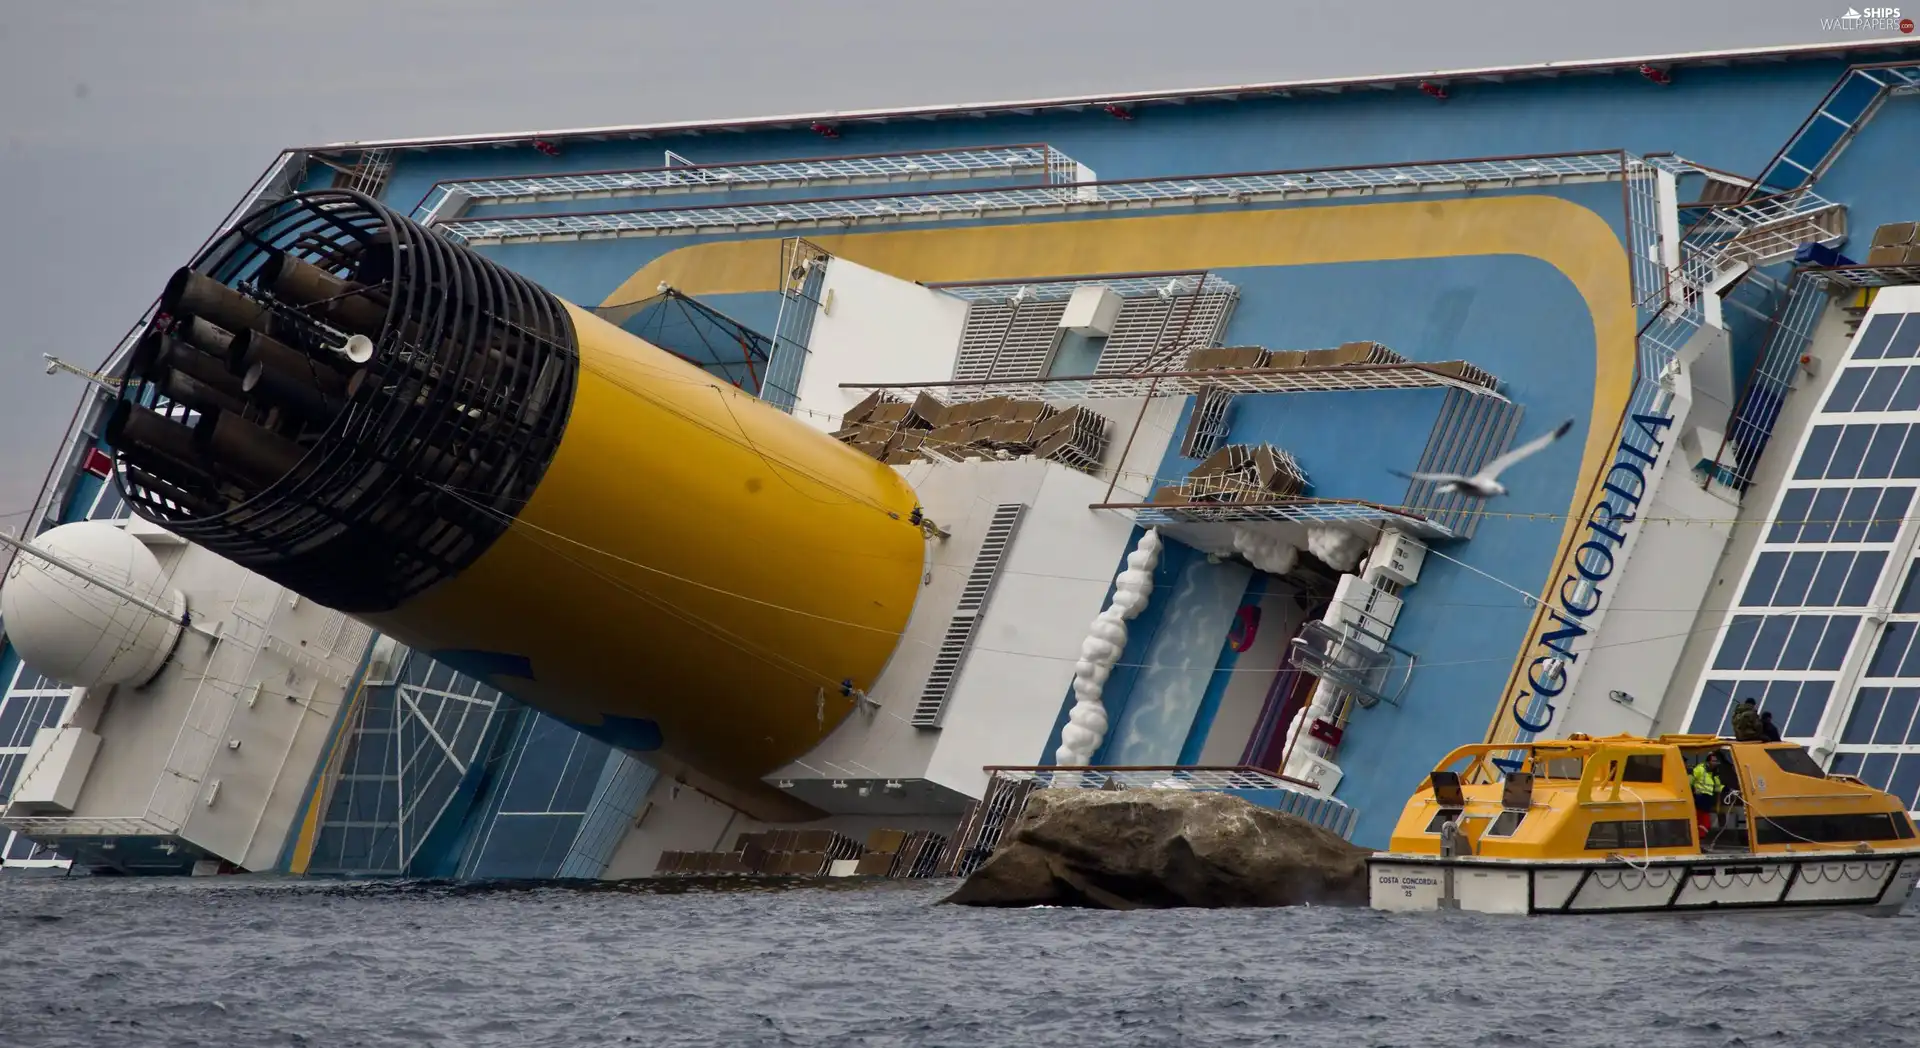 sinking, Costa Concordia, launch, cruise